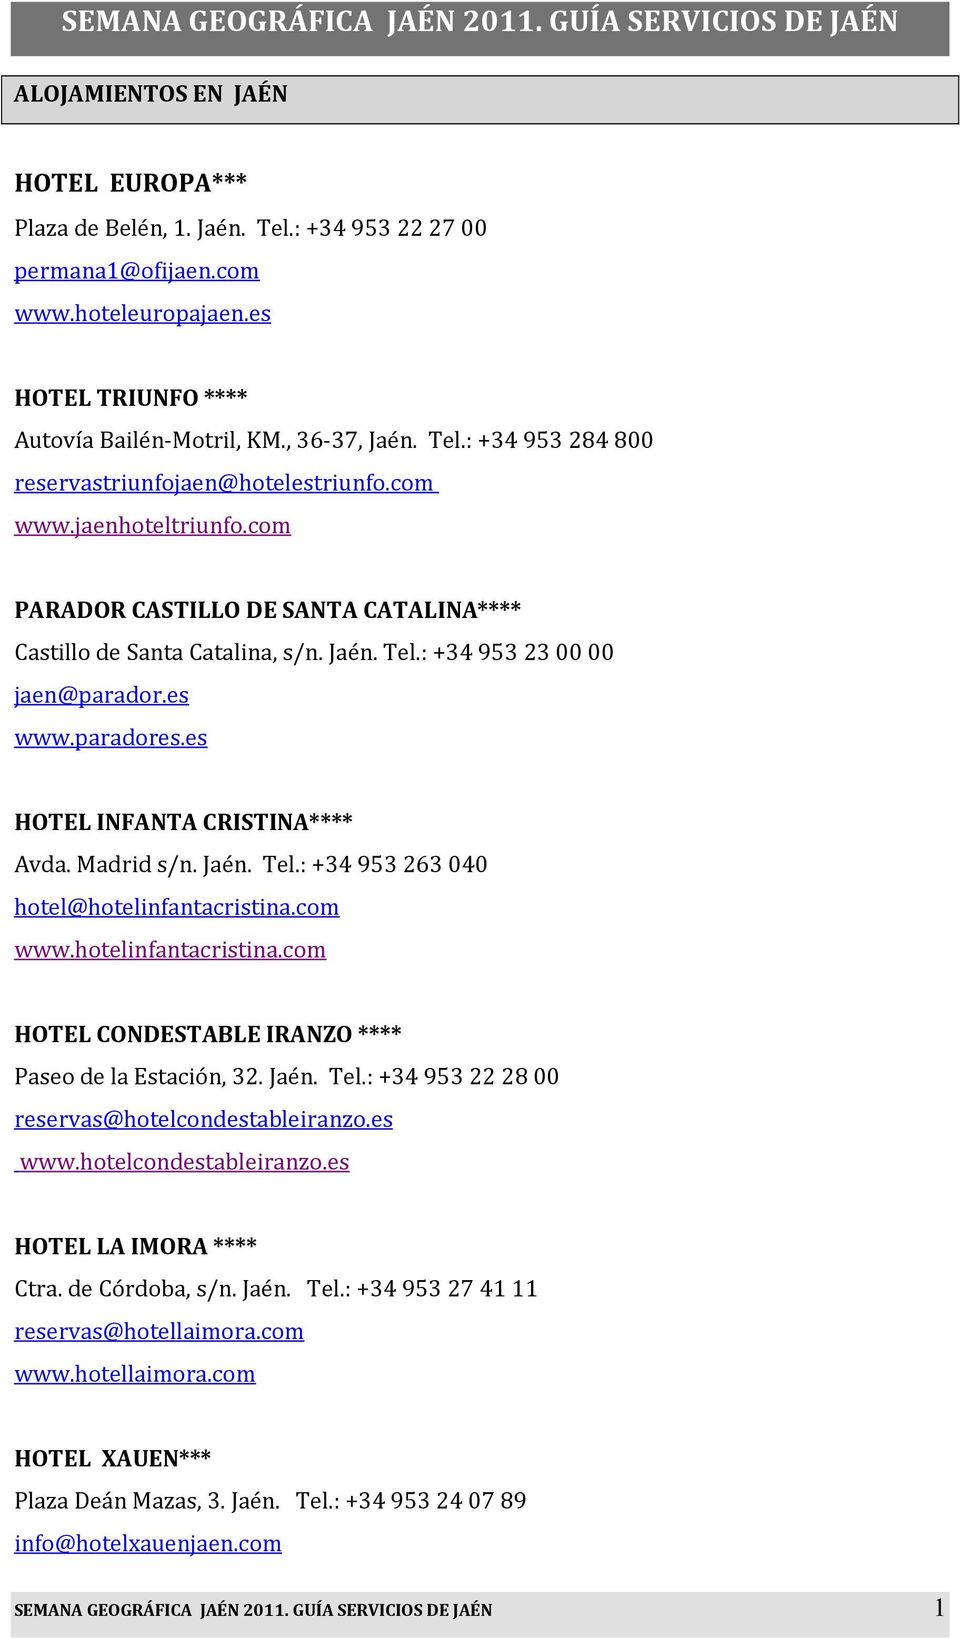 com PARADOR CASTILLO DE SANTA CATALINA**** Castillo de Santa Catalina, s/n. Jaén. Tel.: +34 953230000 jaen@parador.es www.paradores.es HOTEL INFANTA CRISTINA**** Avda. Madrid s/n. Jaén. Tel.: +34 953263040 hotel@hotelinfantacristina.